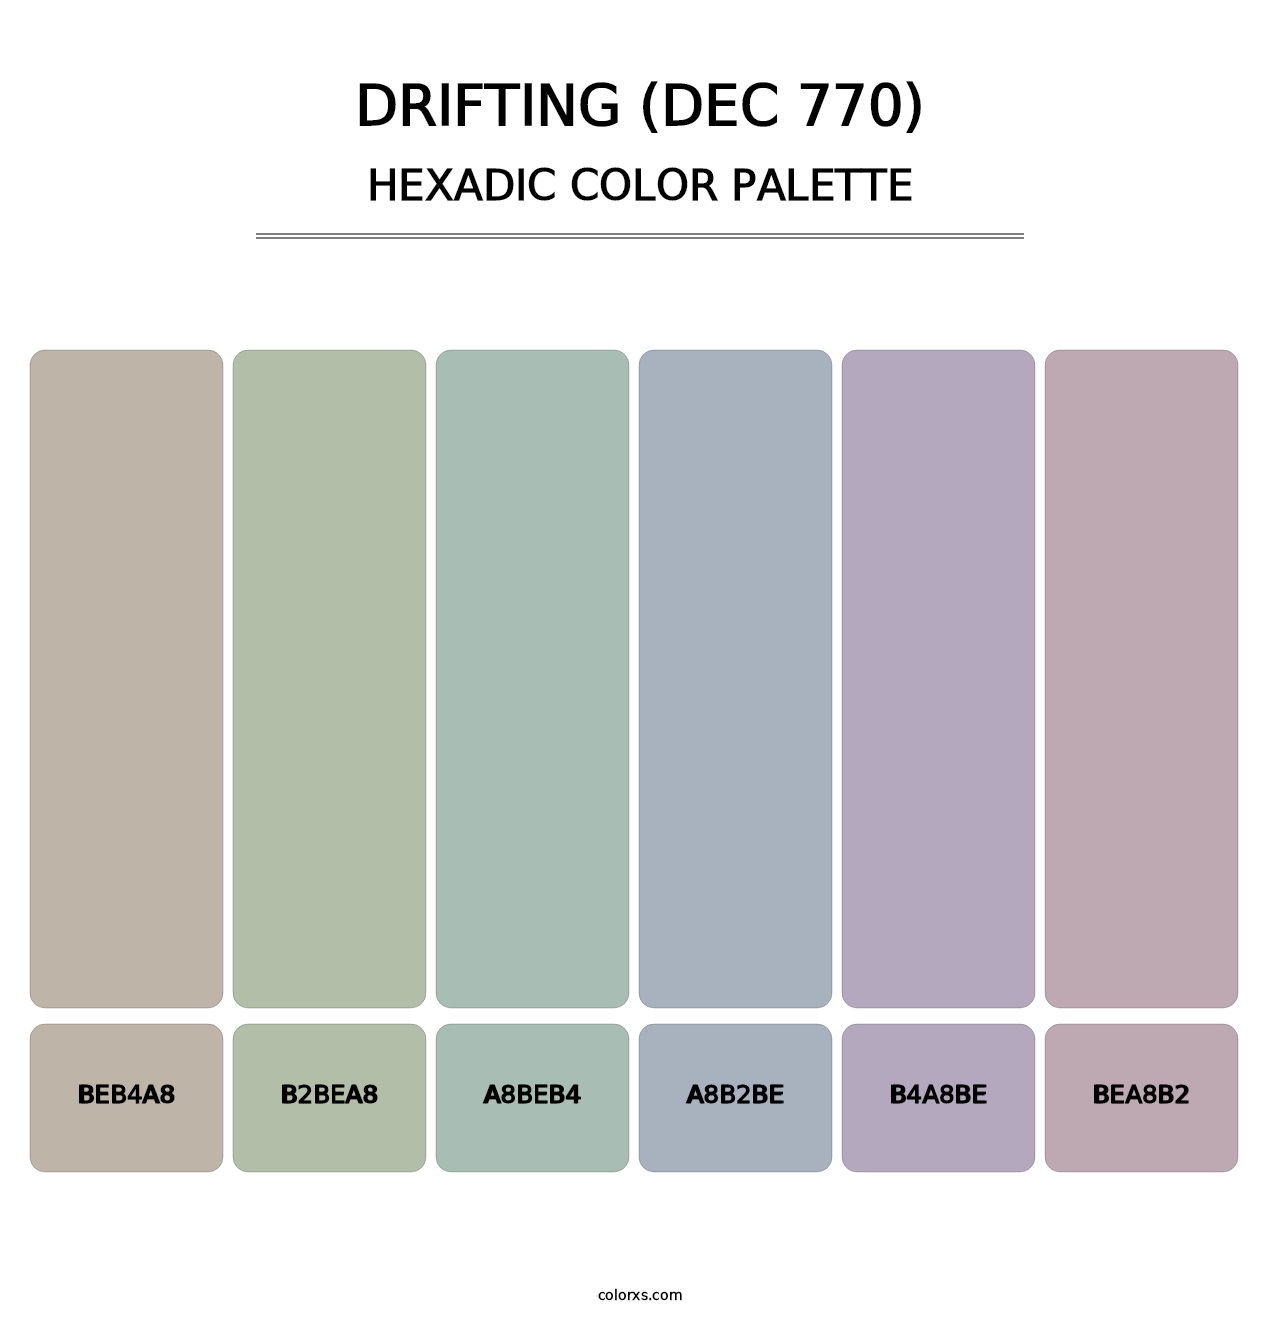 Drifting (DEC 770) - Hexadic Color Palette